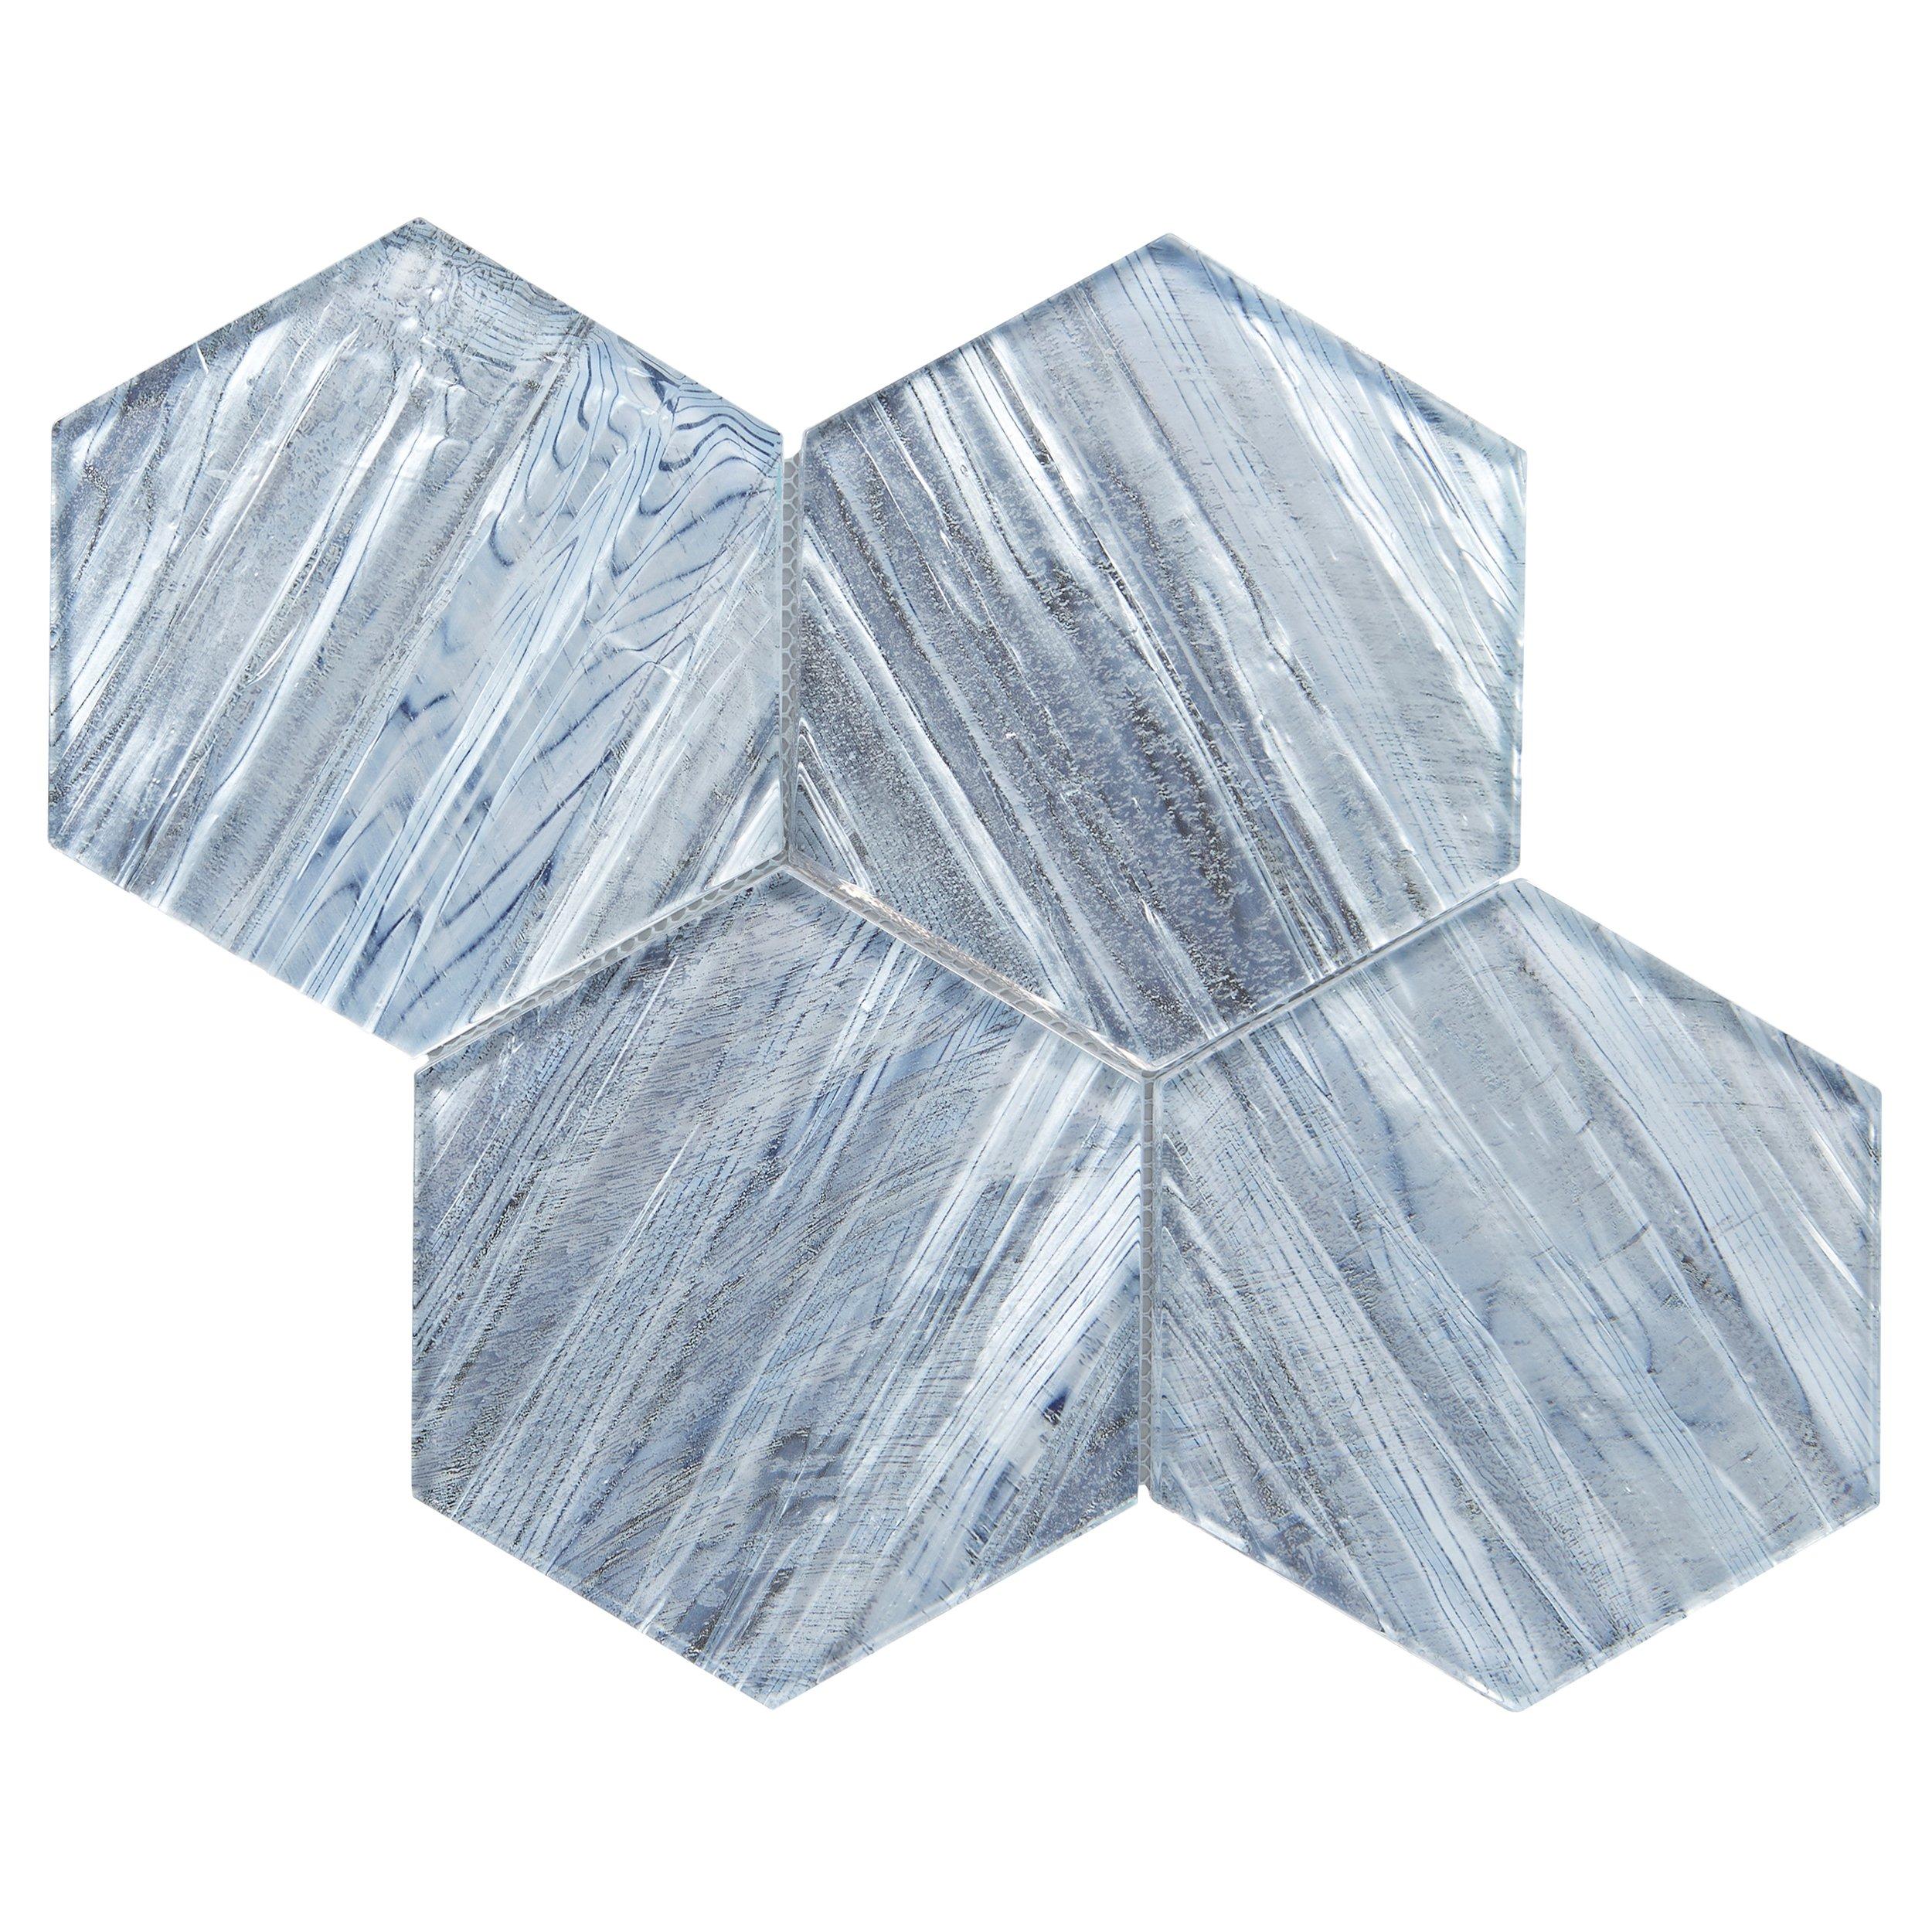 Glacier Gleam 6 in. Hexagon Glass Mosaic